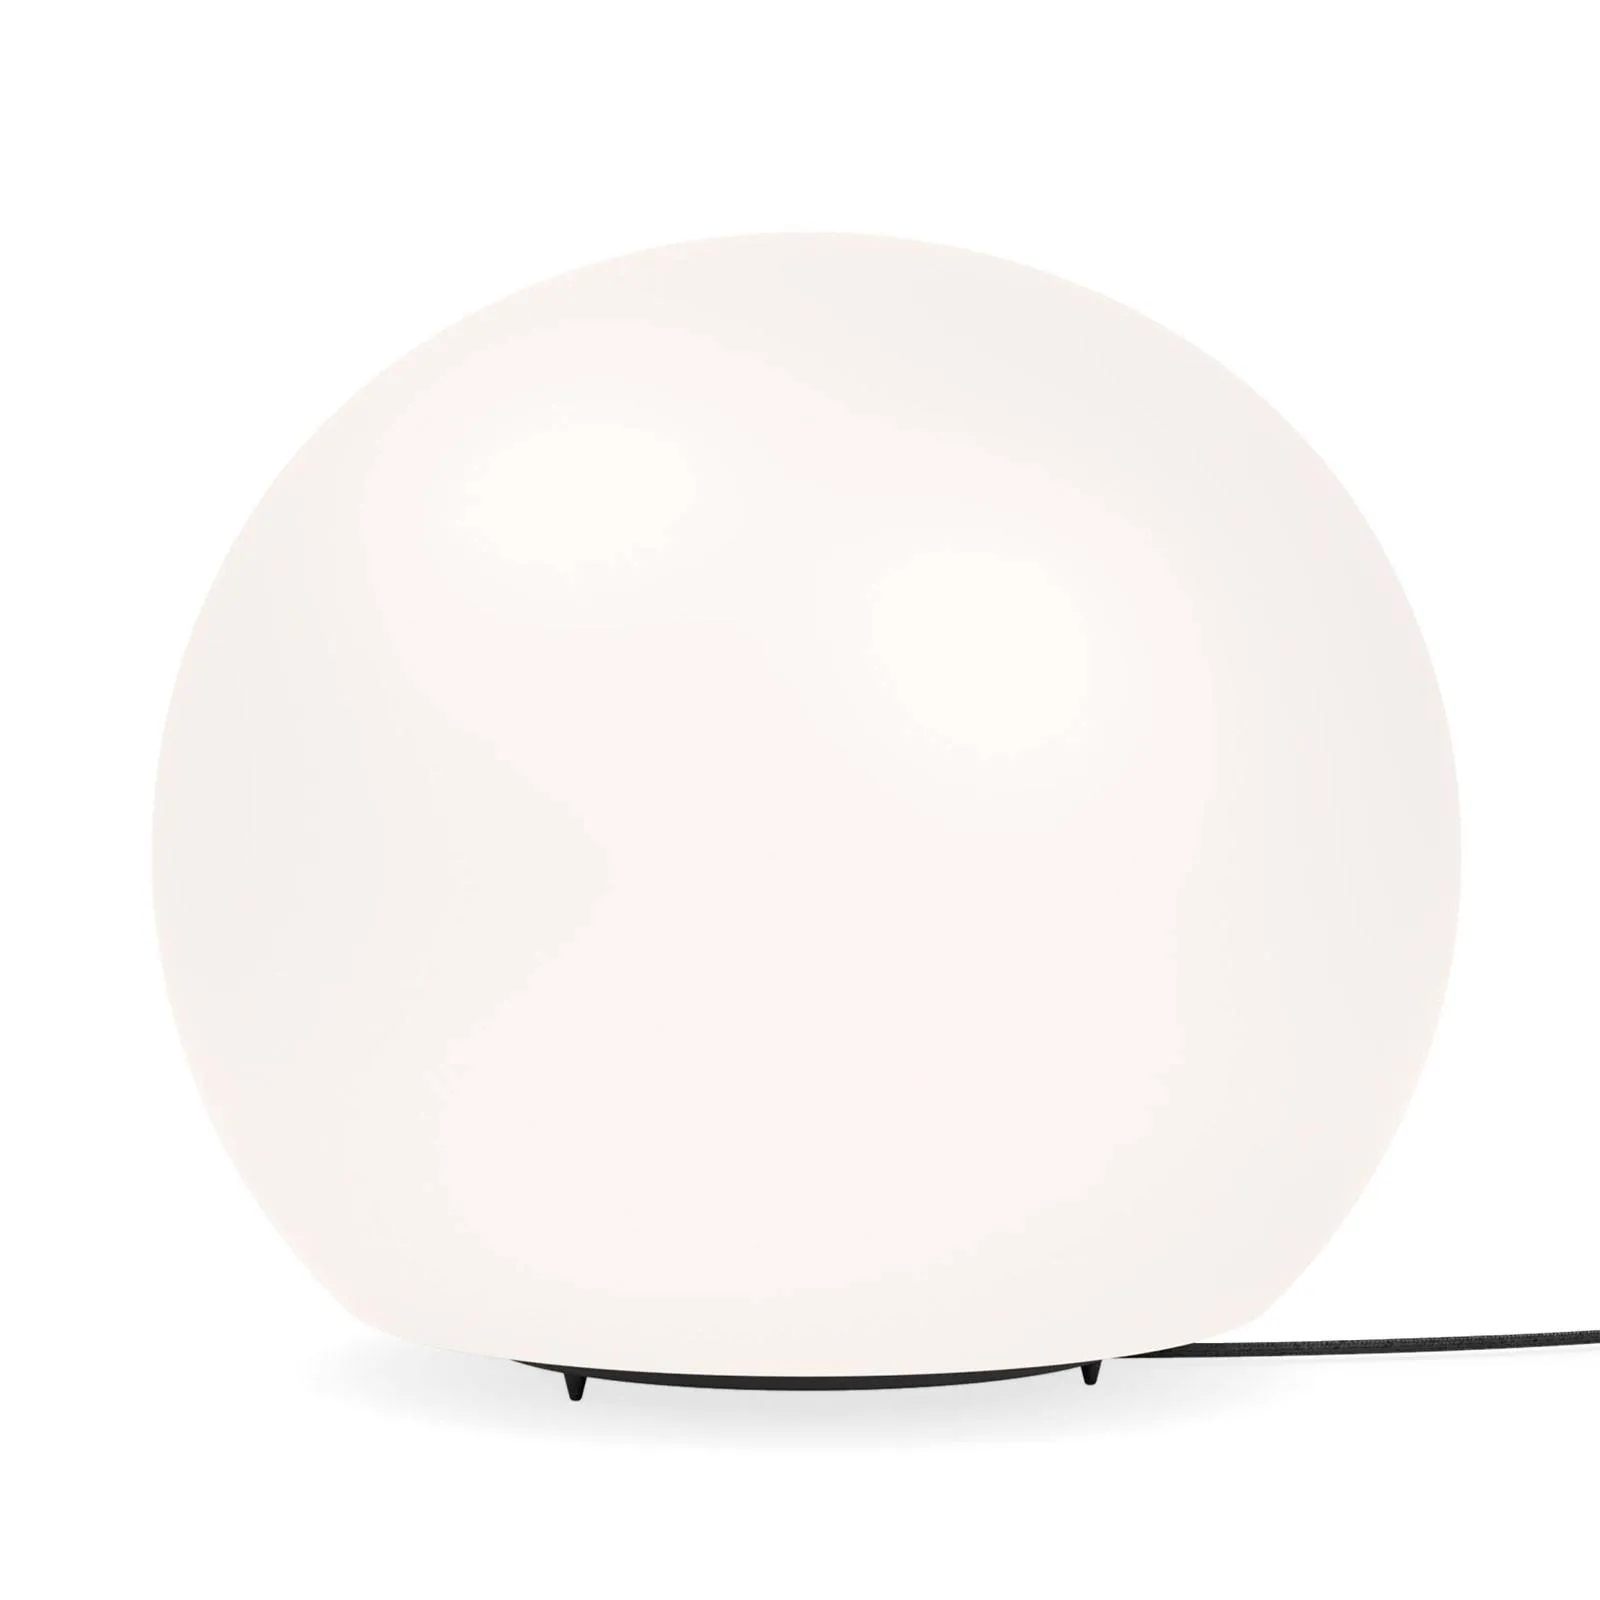  WEVER &amp; DUCRÉ Dro 3.0 lampada da tavolo bianca e nera